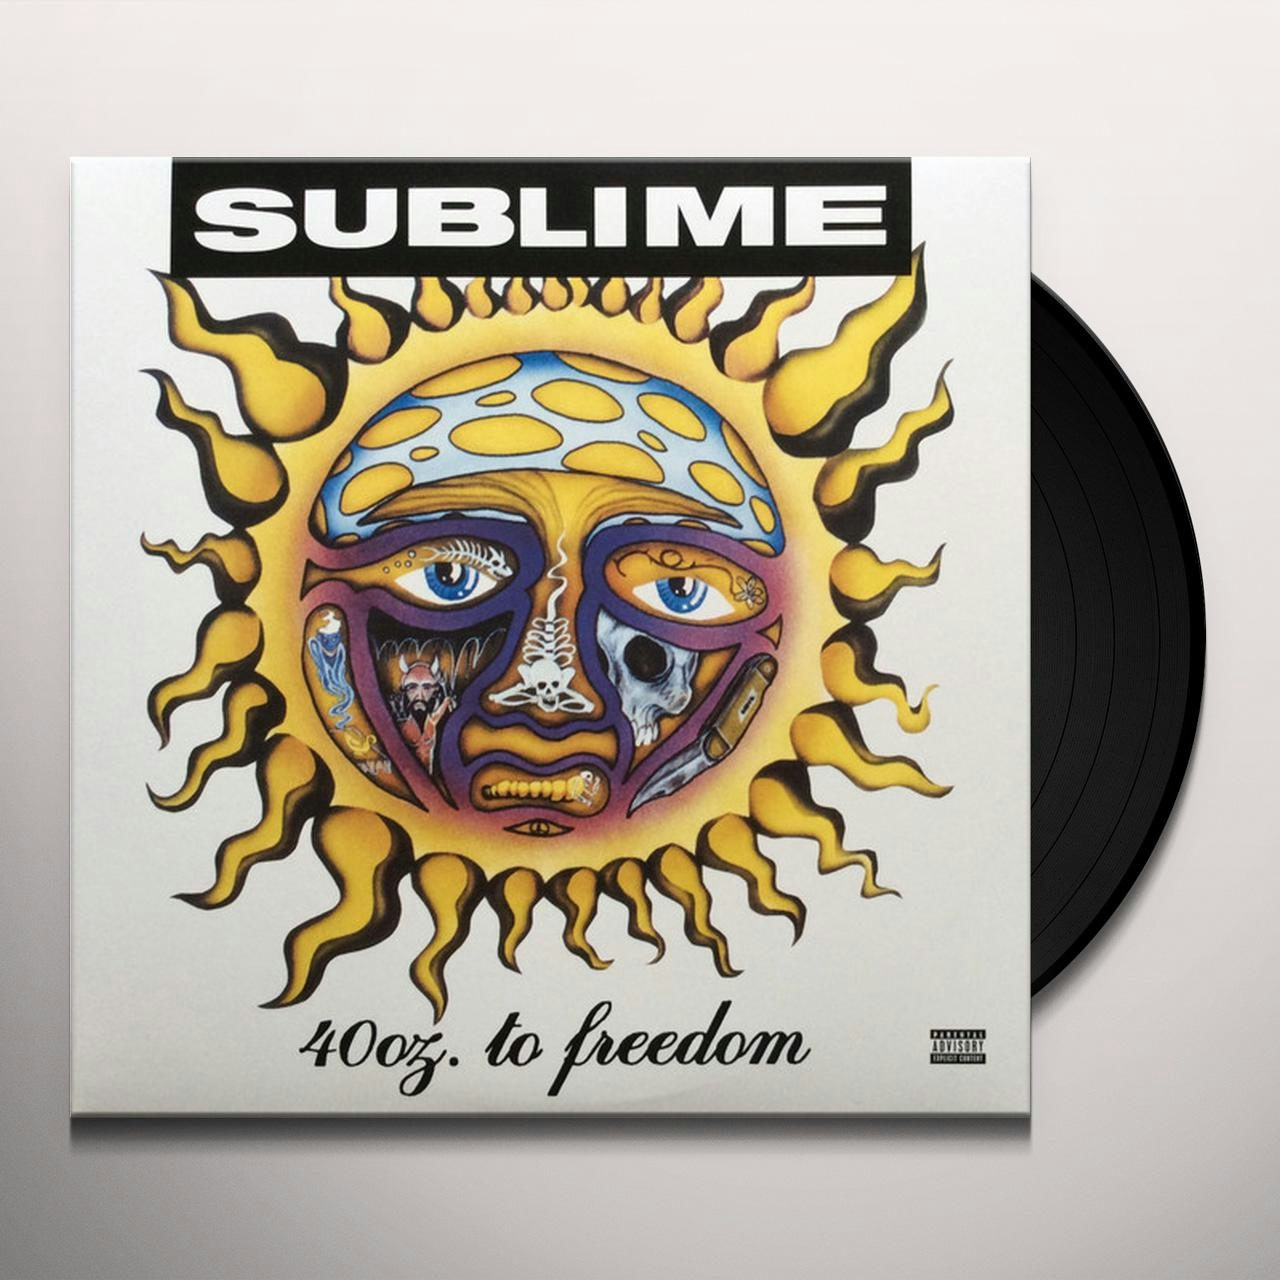 Sublime 40oz. To Freedom Vinyl Record